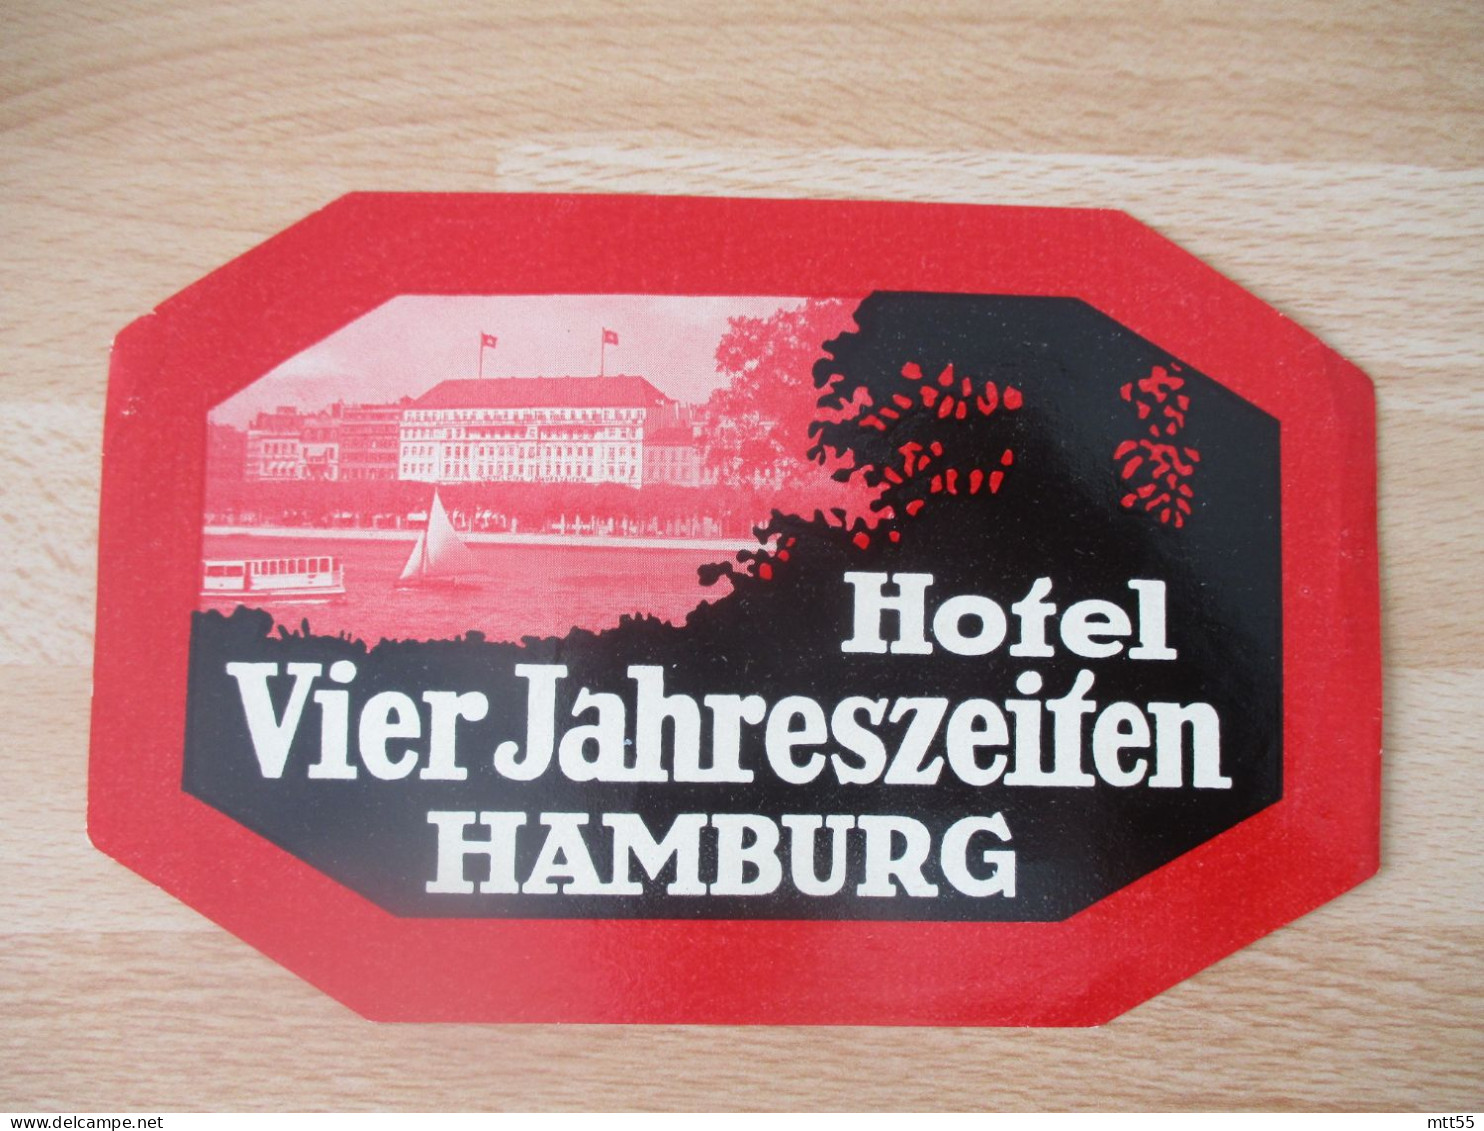 HAMBURG HAMBOURG HOTEL VIER JAHNRESZEIIEN  ETIQUETTE HOTEL - Adesivi Di Alberghi